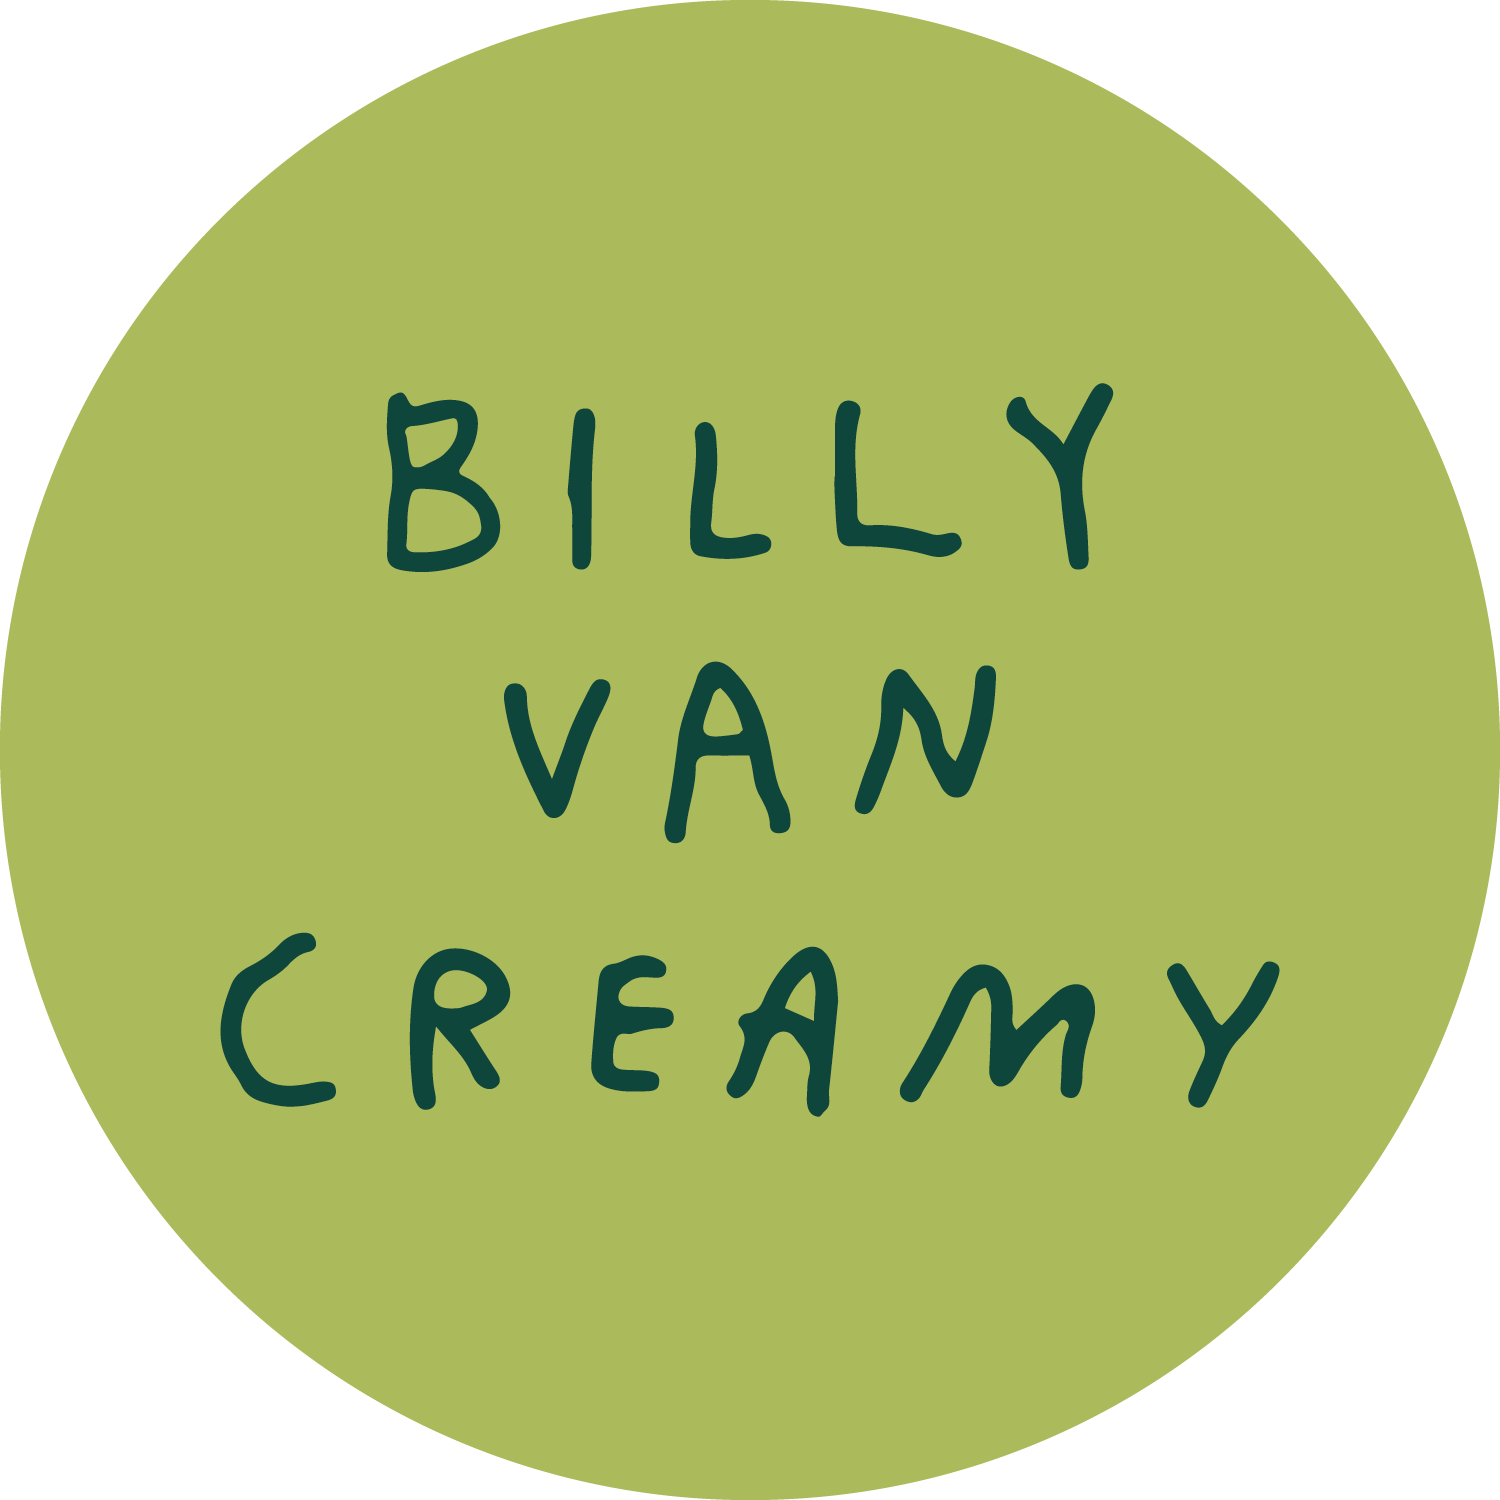 BILLY VAN CREAMY